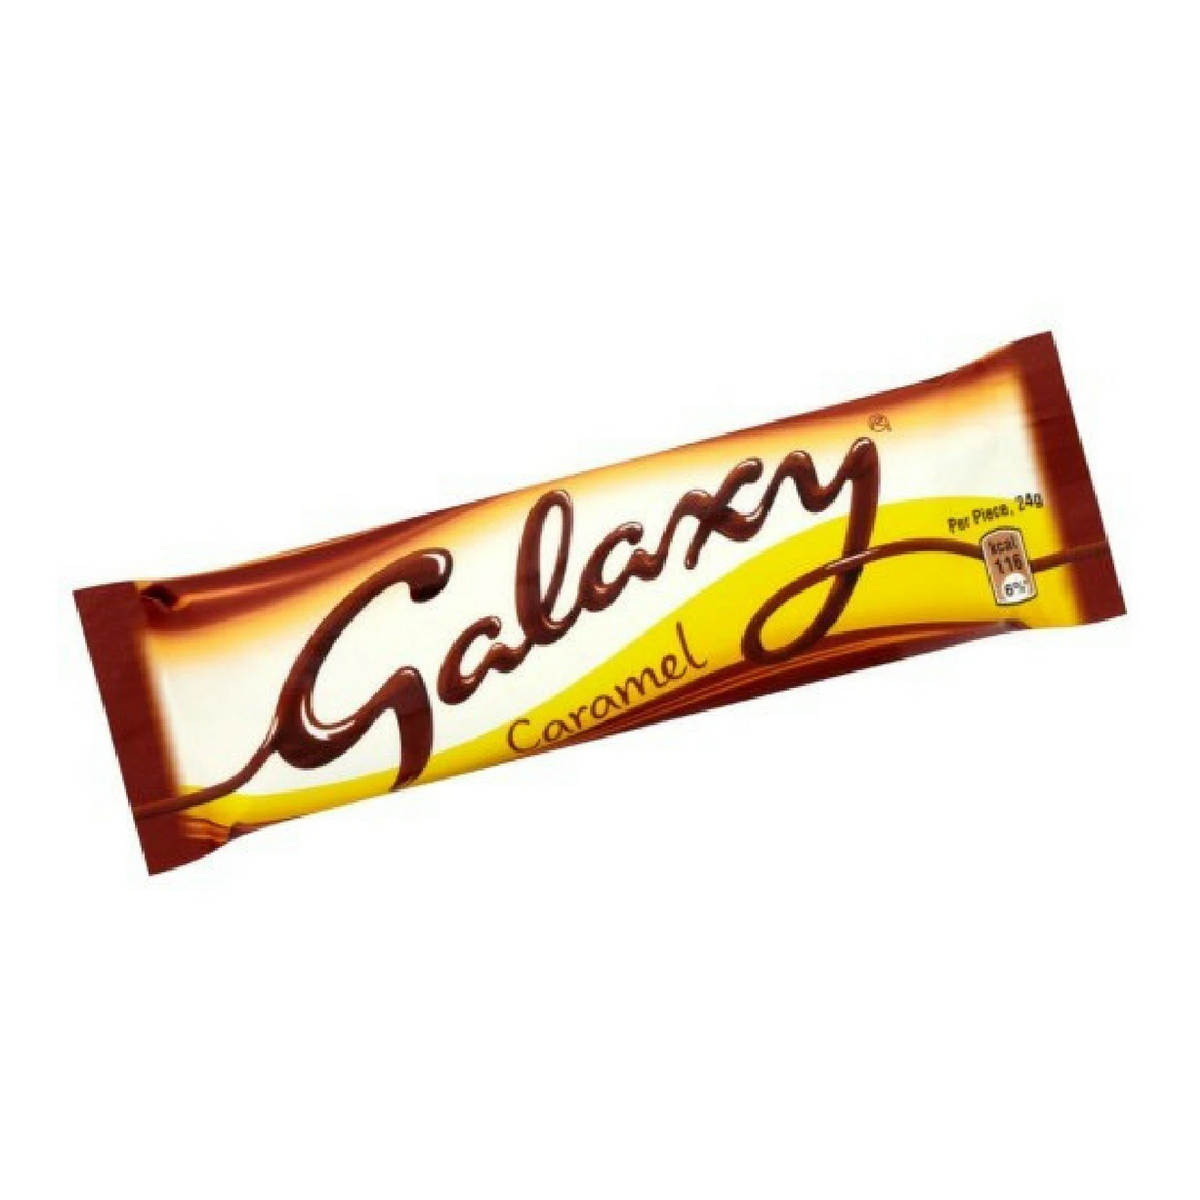 Galaxy Smooth Caramel (UK) - 48